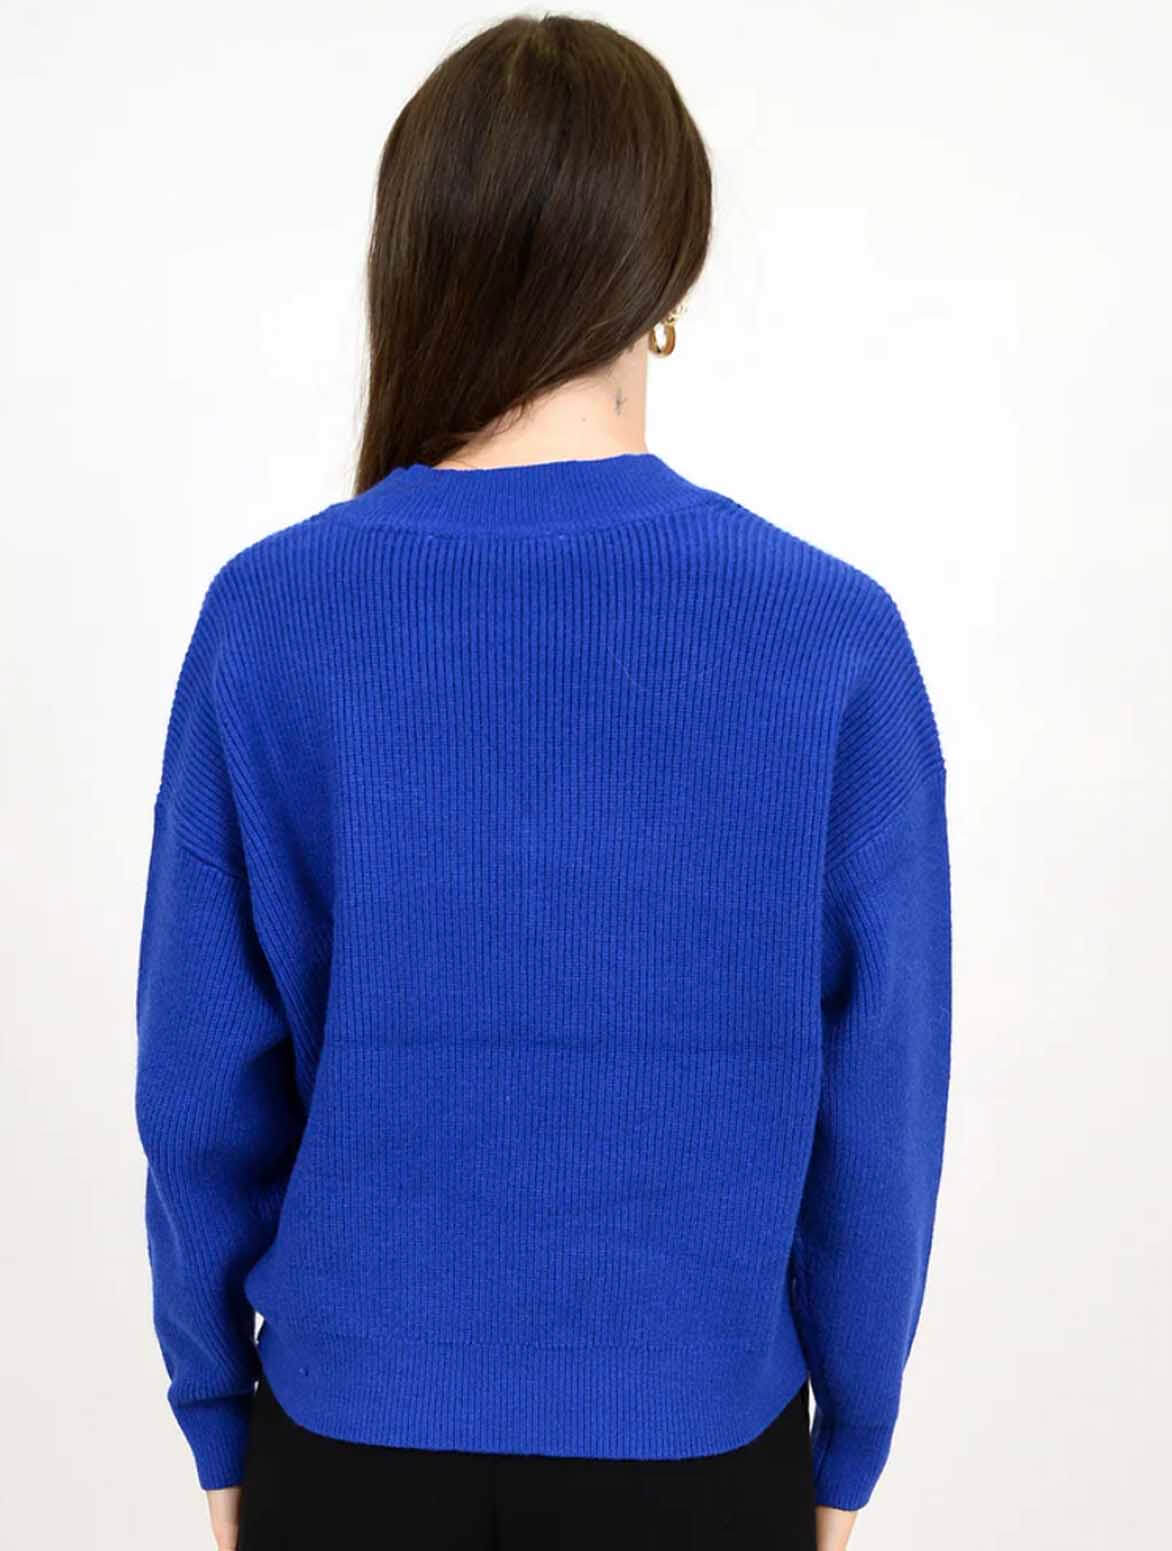 Manuela V-Neck Sweater in Cosmic Blue